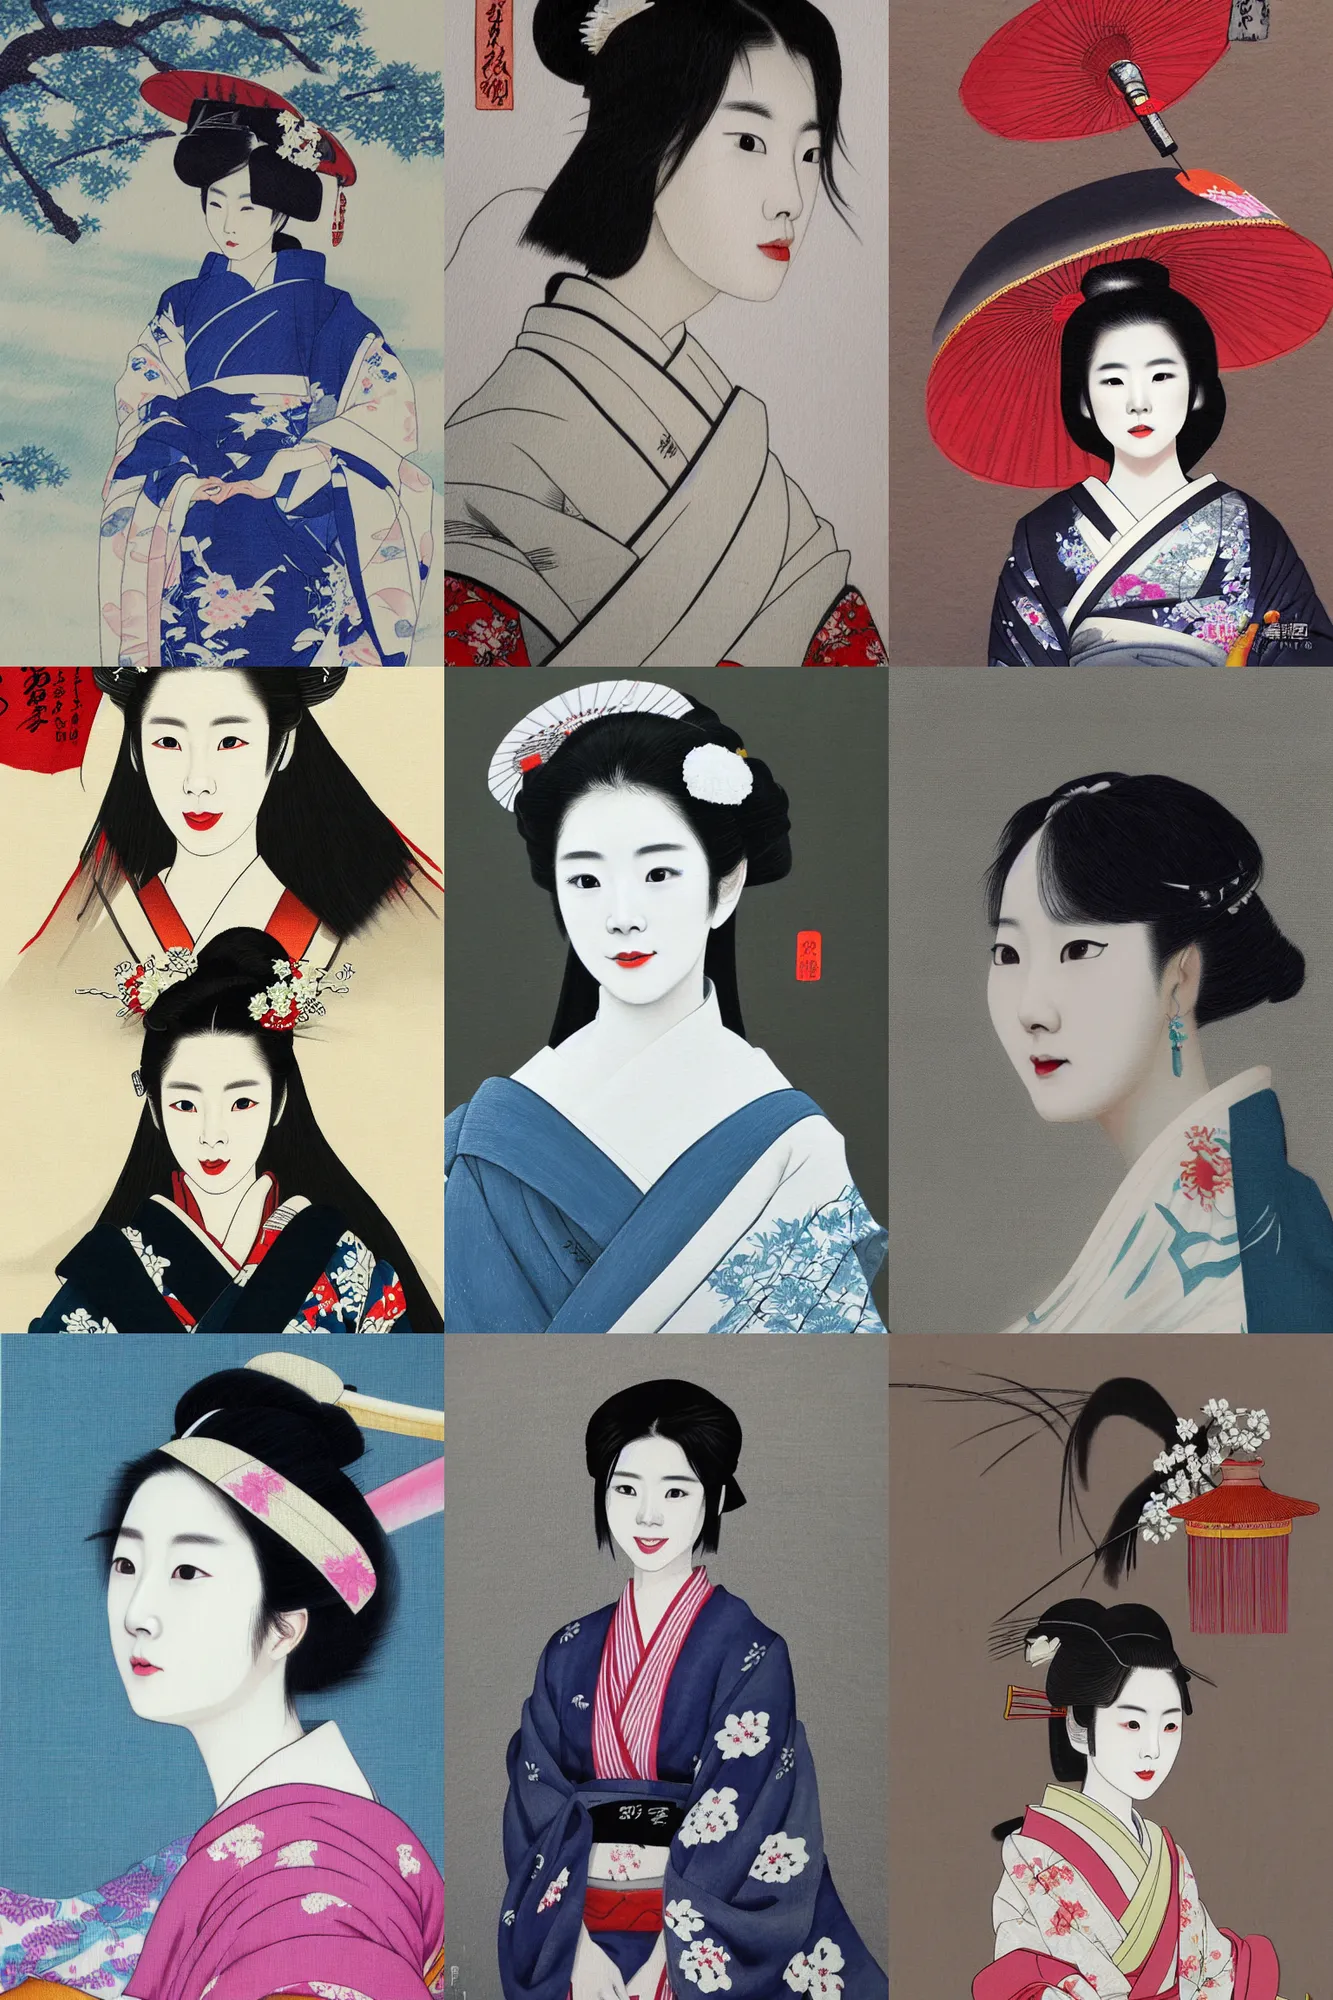 Prompt: painting of han hyo-joo as Maiko, by Shimura TATSUMI, super detailed, photo realistic, hd